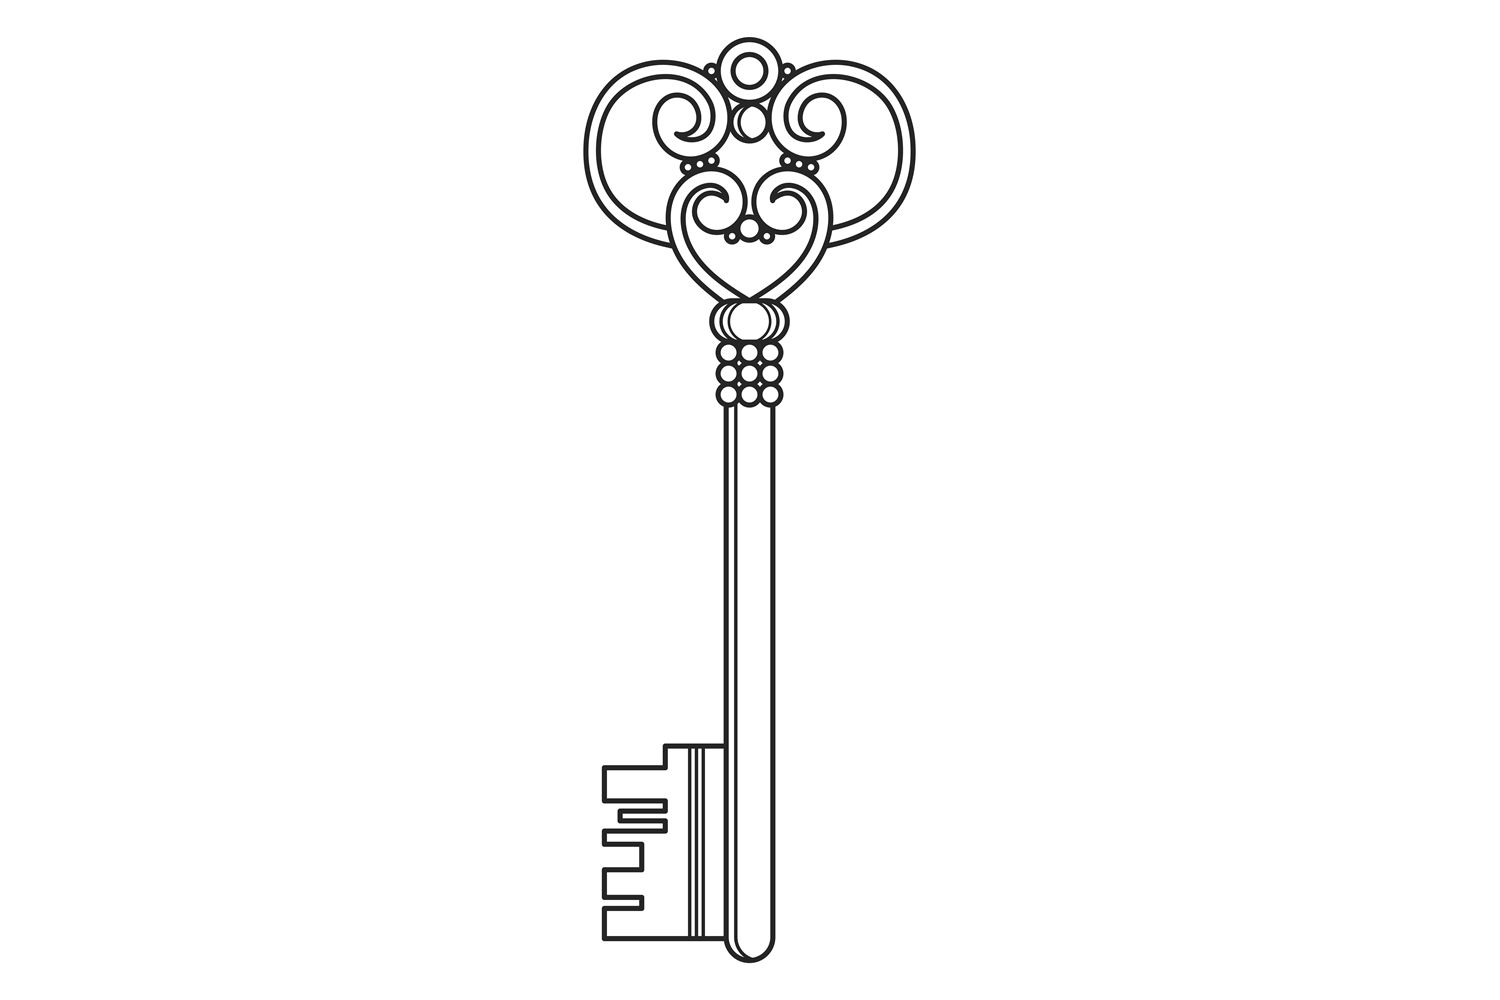 Ornate Skeleton Key Drawing. Door Lock S Graphic by onyxproj · Creative ...